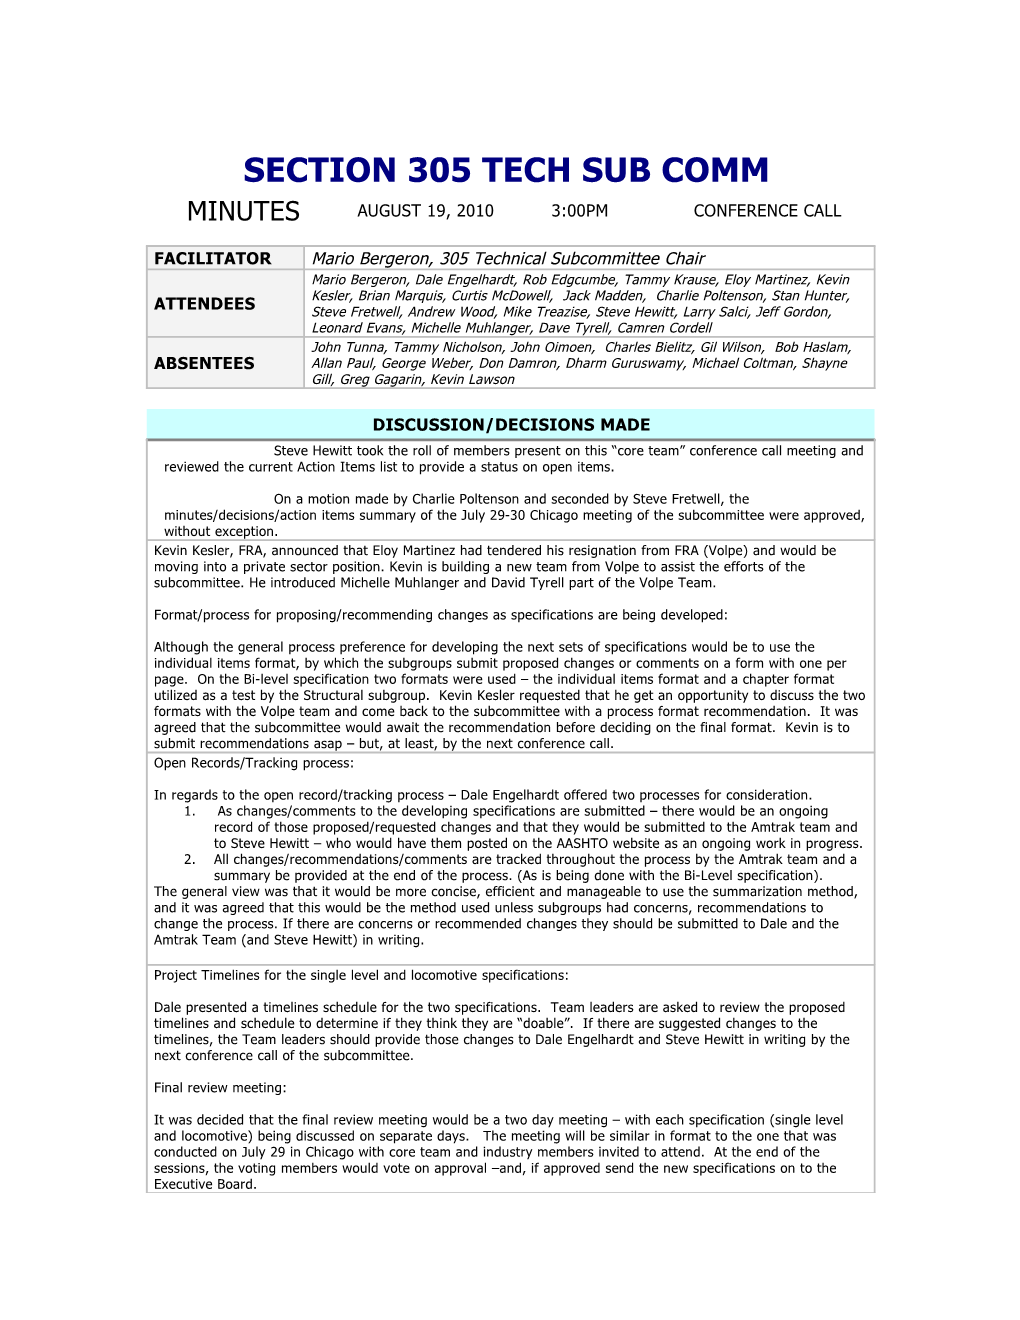 Section 305 Tech Sub Comm s8